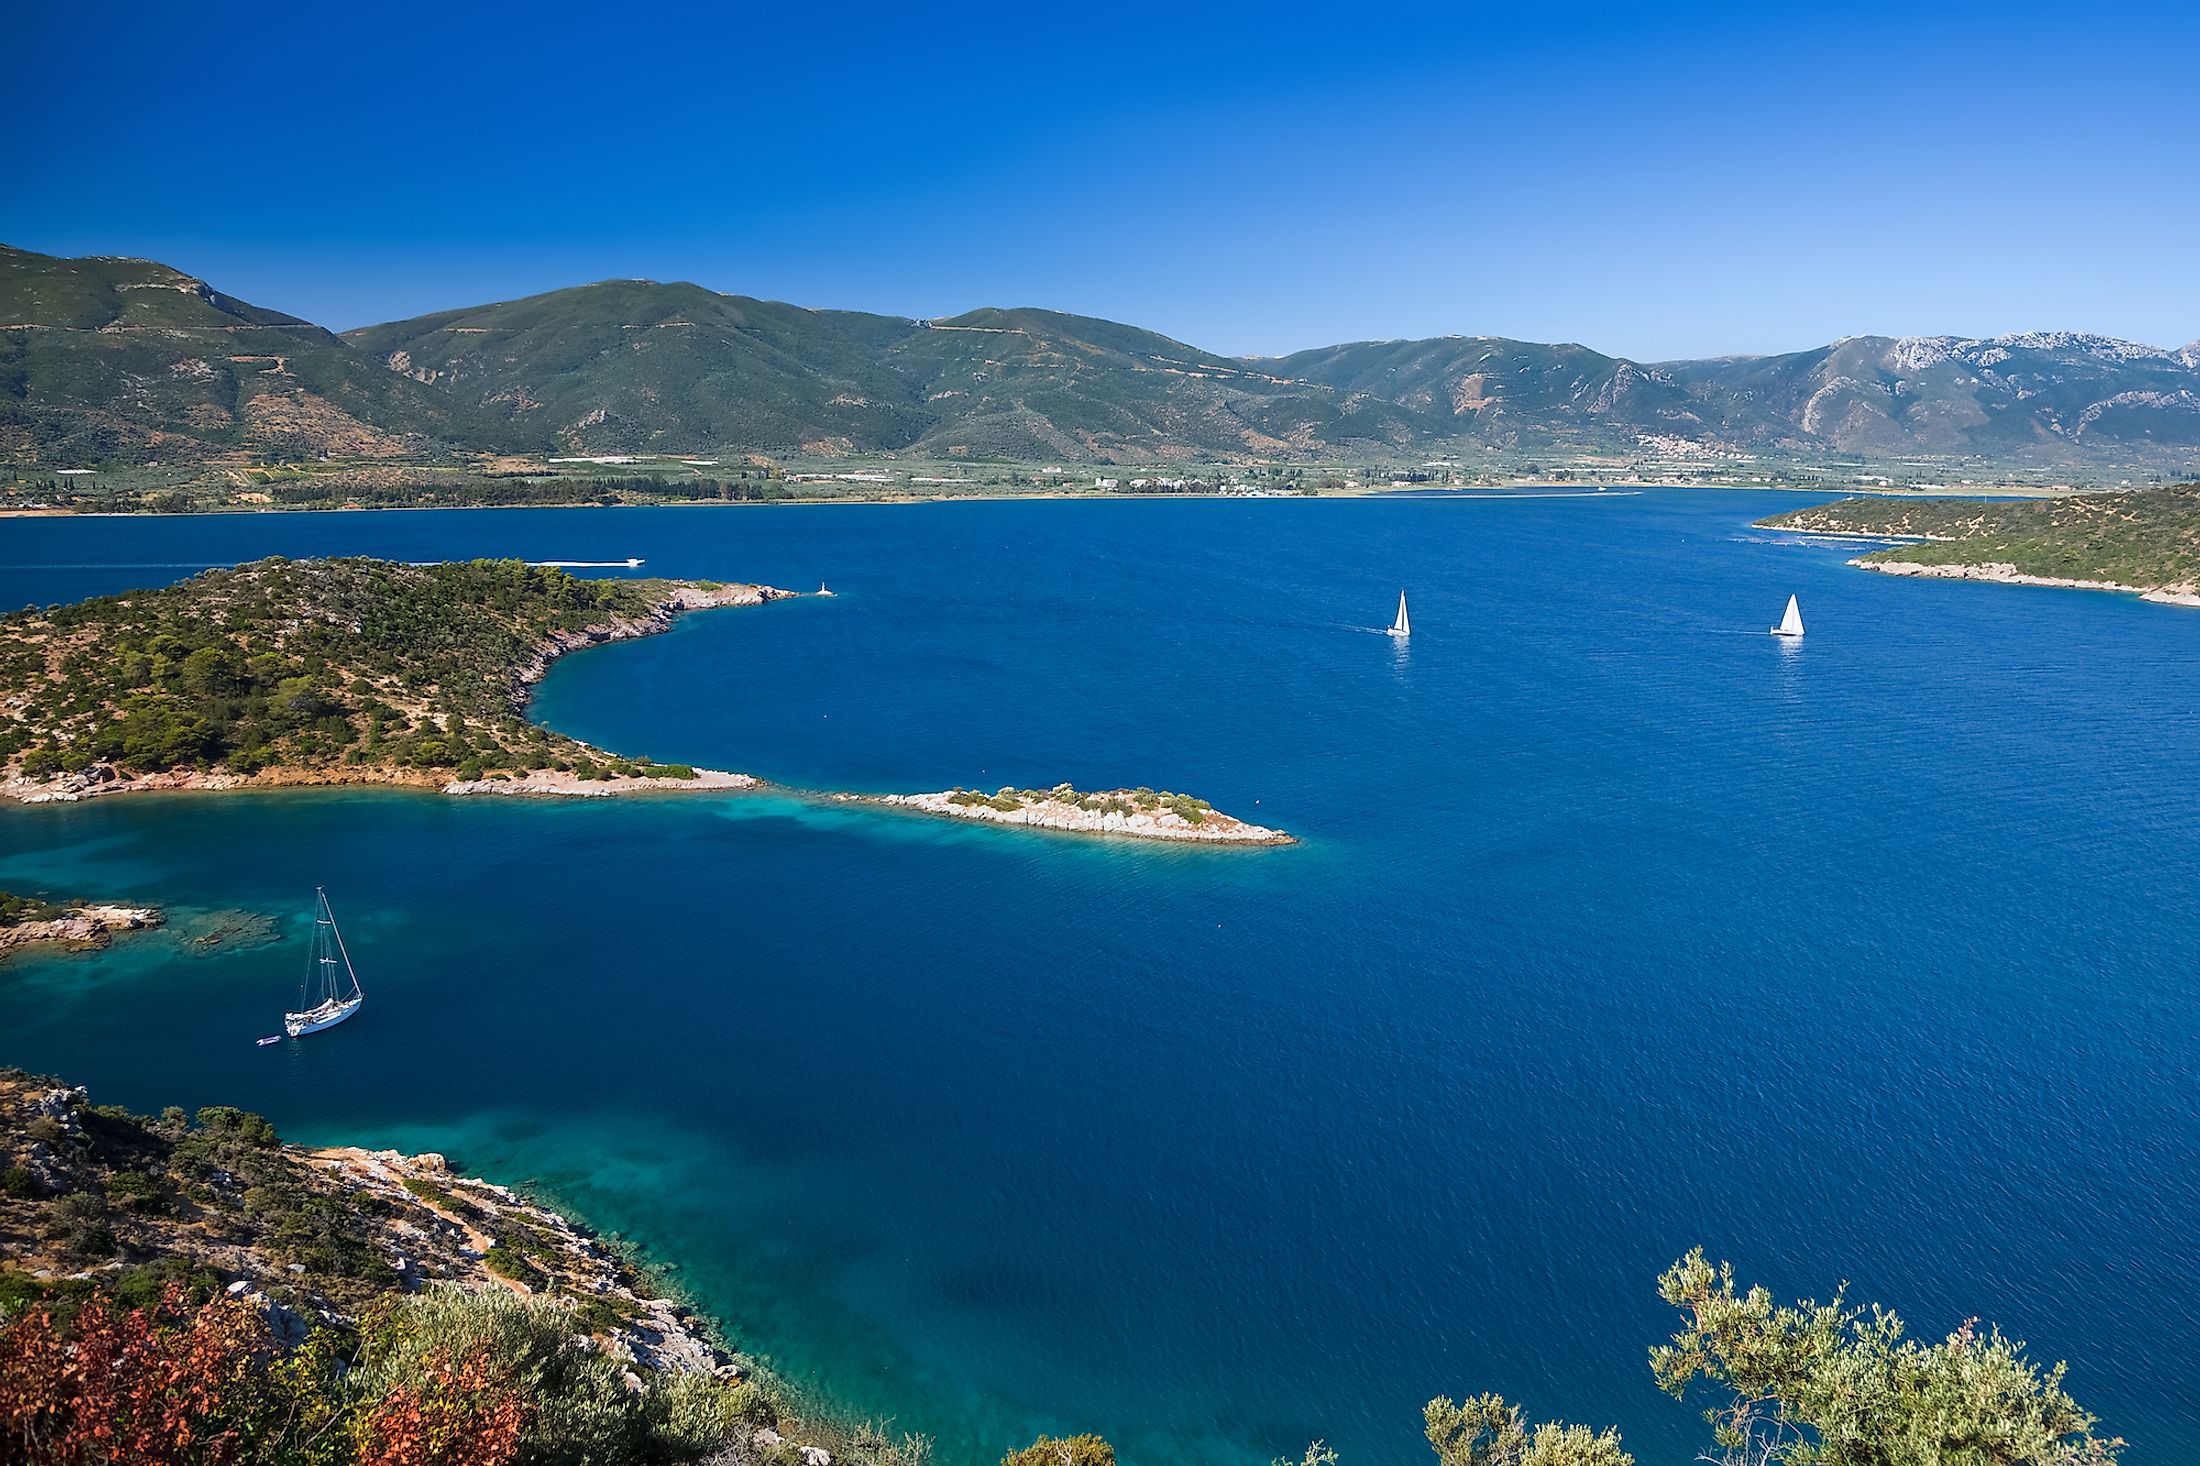 Yachts in Aegean sea near Poros, Greece. Image credit: S.Borisov/Shutterstock.com